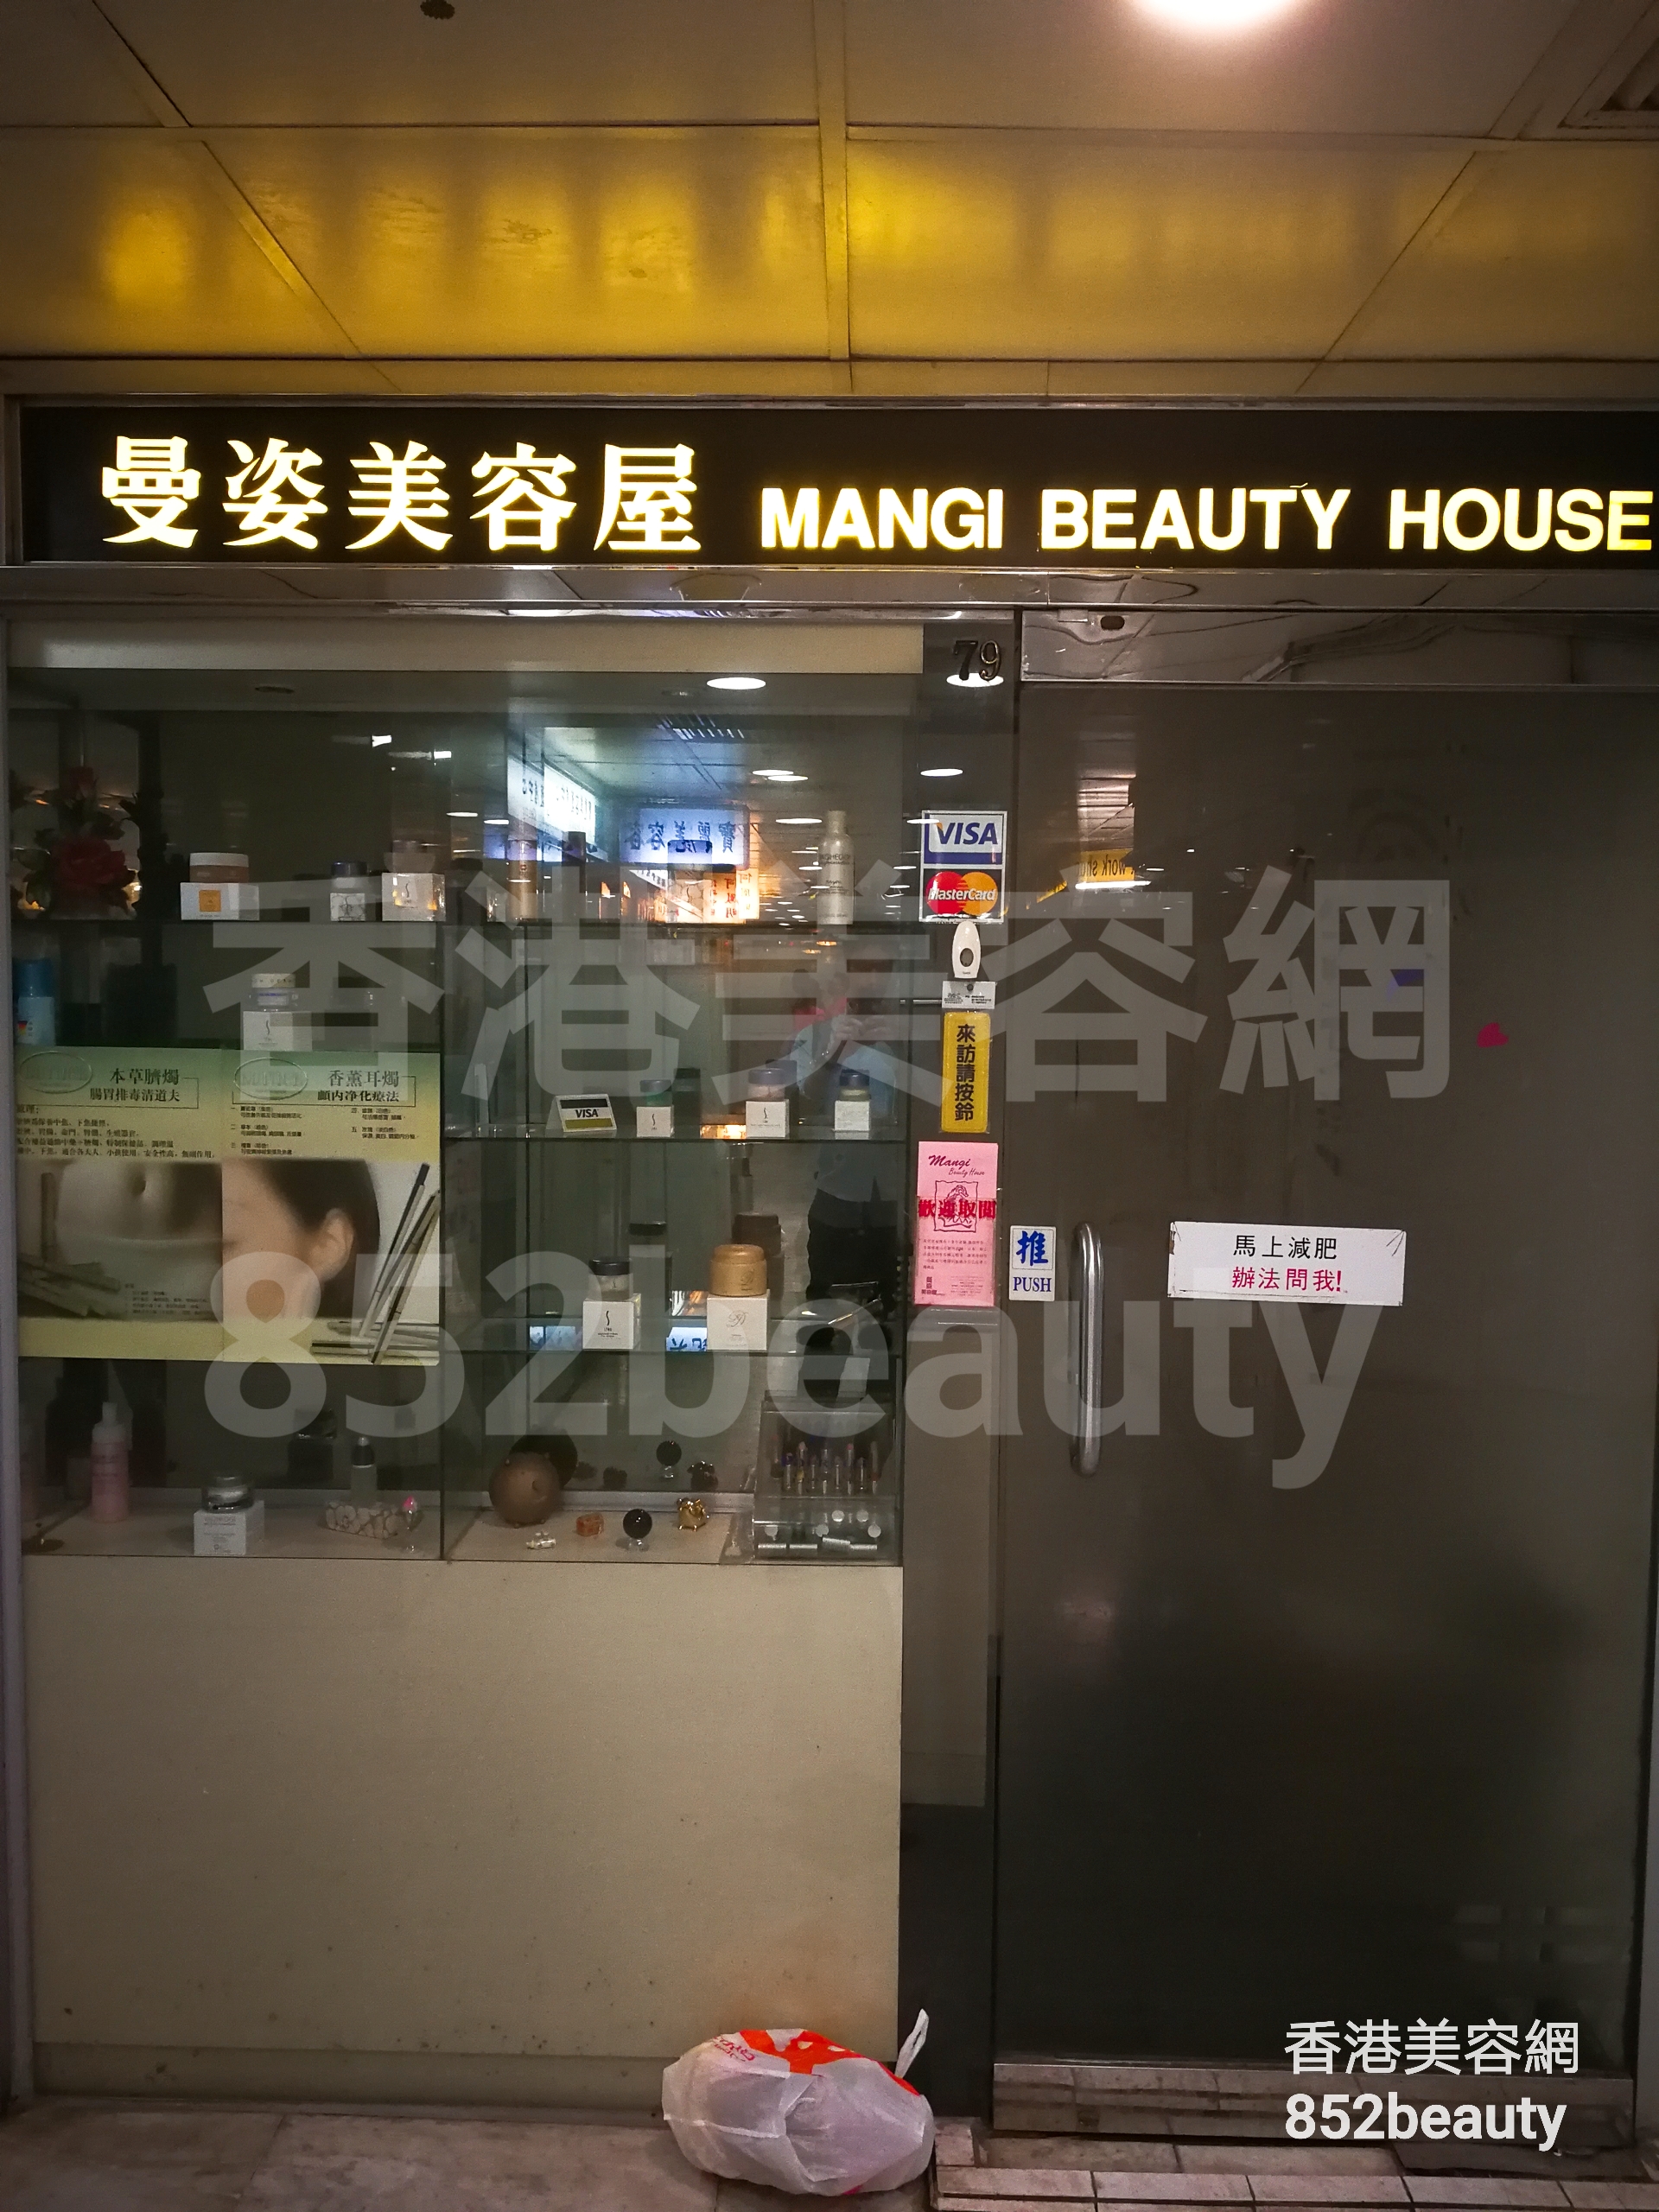 香港美容網 Hong Kong Beauty Salon 美容院 / 美容師: Mangi Beauty House